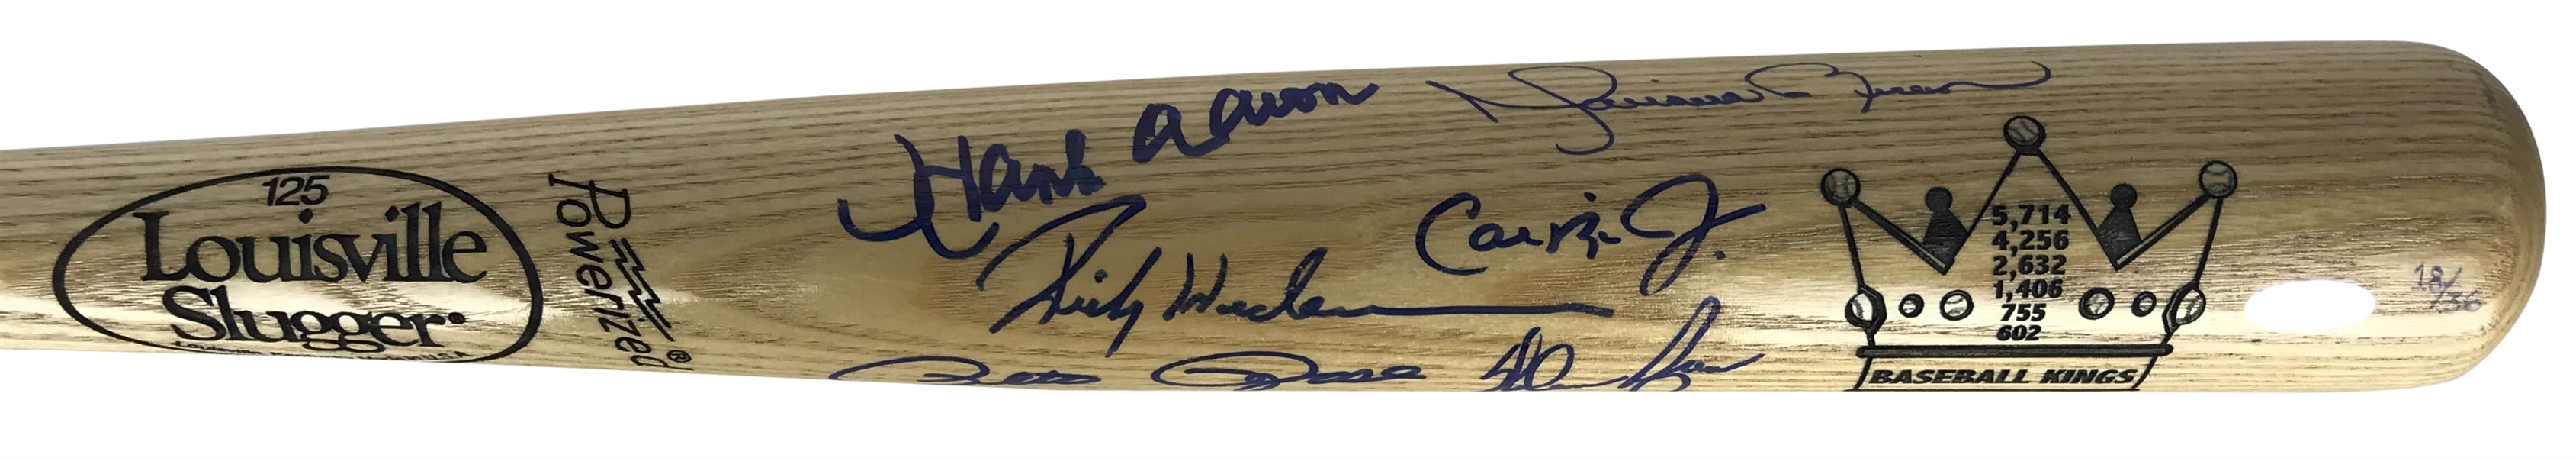 Kings of Baseball Multi-Signed Baseball Bat w/ Aaron, Rivera, Ryan & Others! (Steiner Sports)